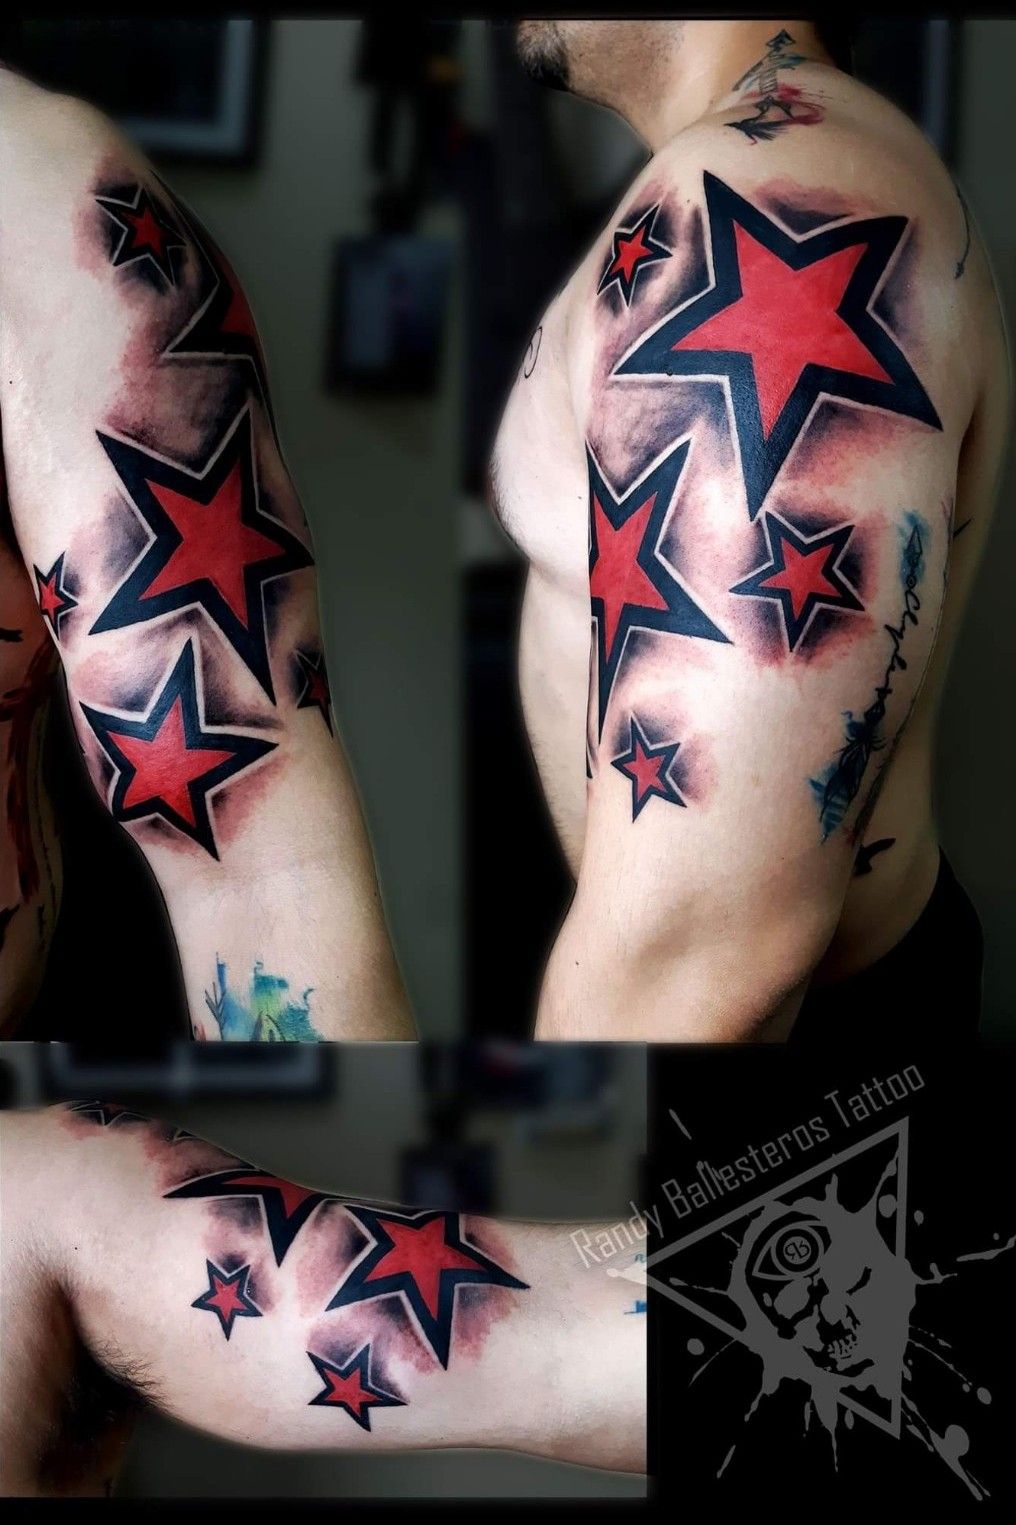 20 Water Slide Nail Art Decal Transfers Red Star Design With Black   Nautical star tattoos Star tattoo designs Star tattoos